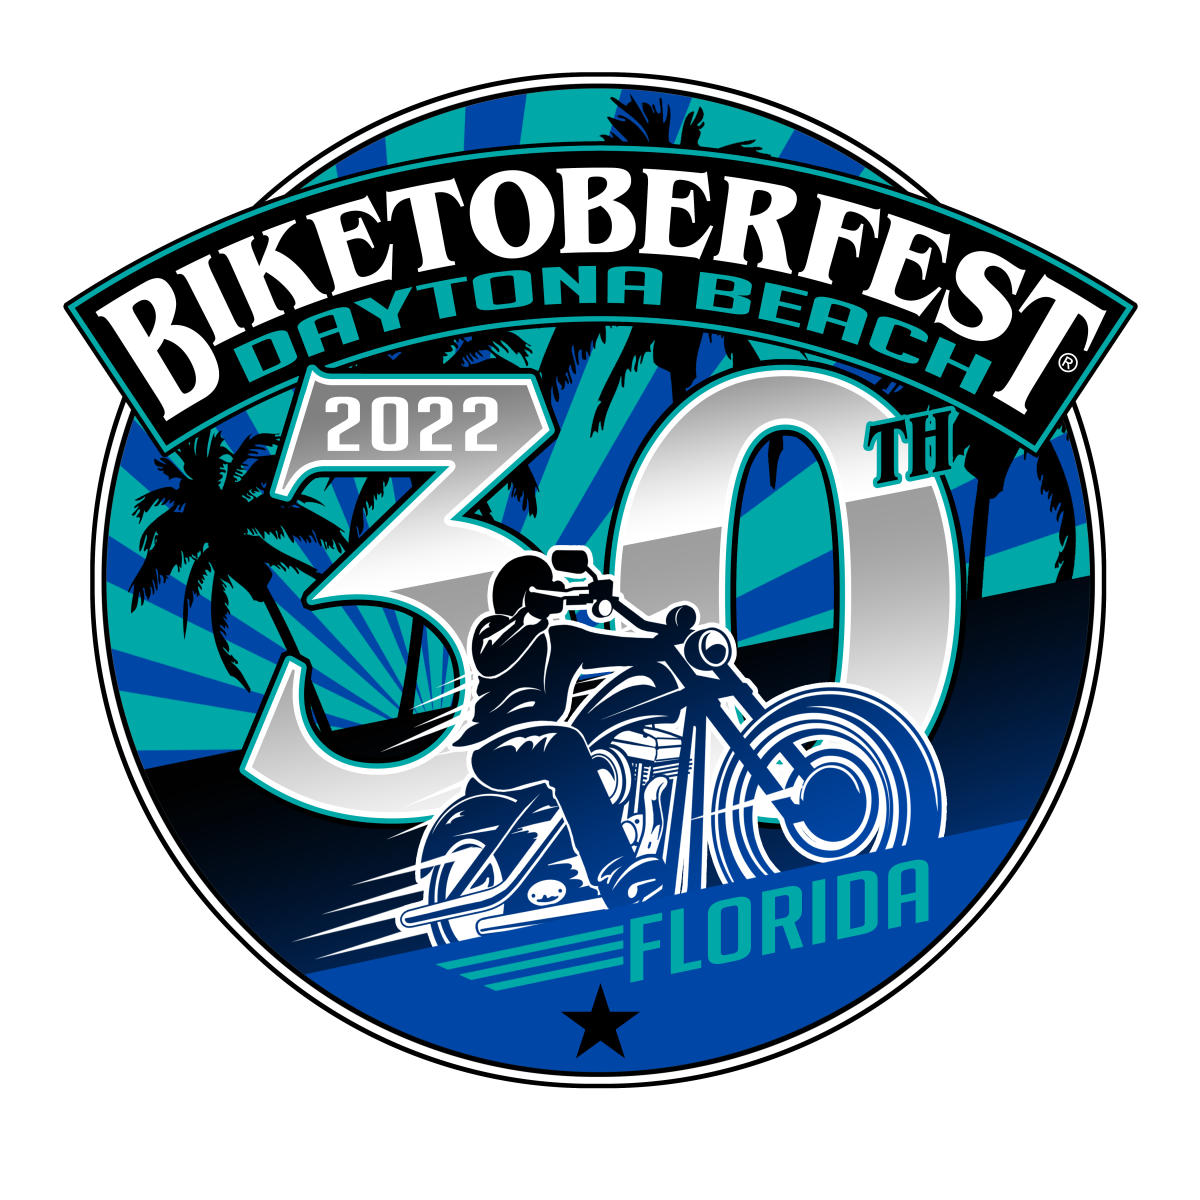 Cabbage patch biketoberfest 2022